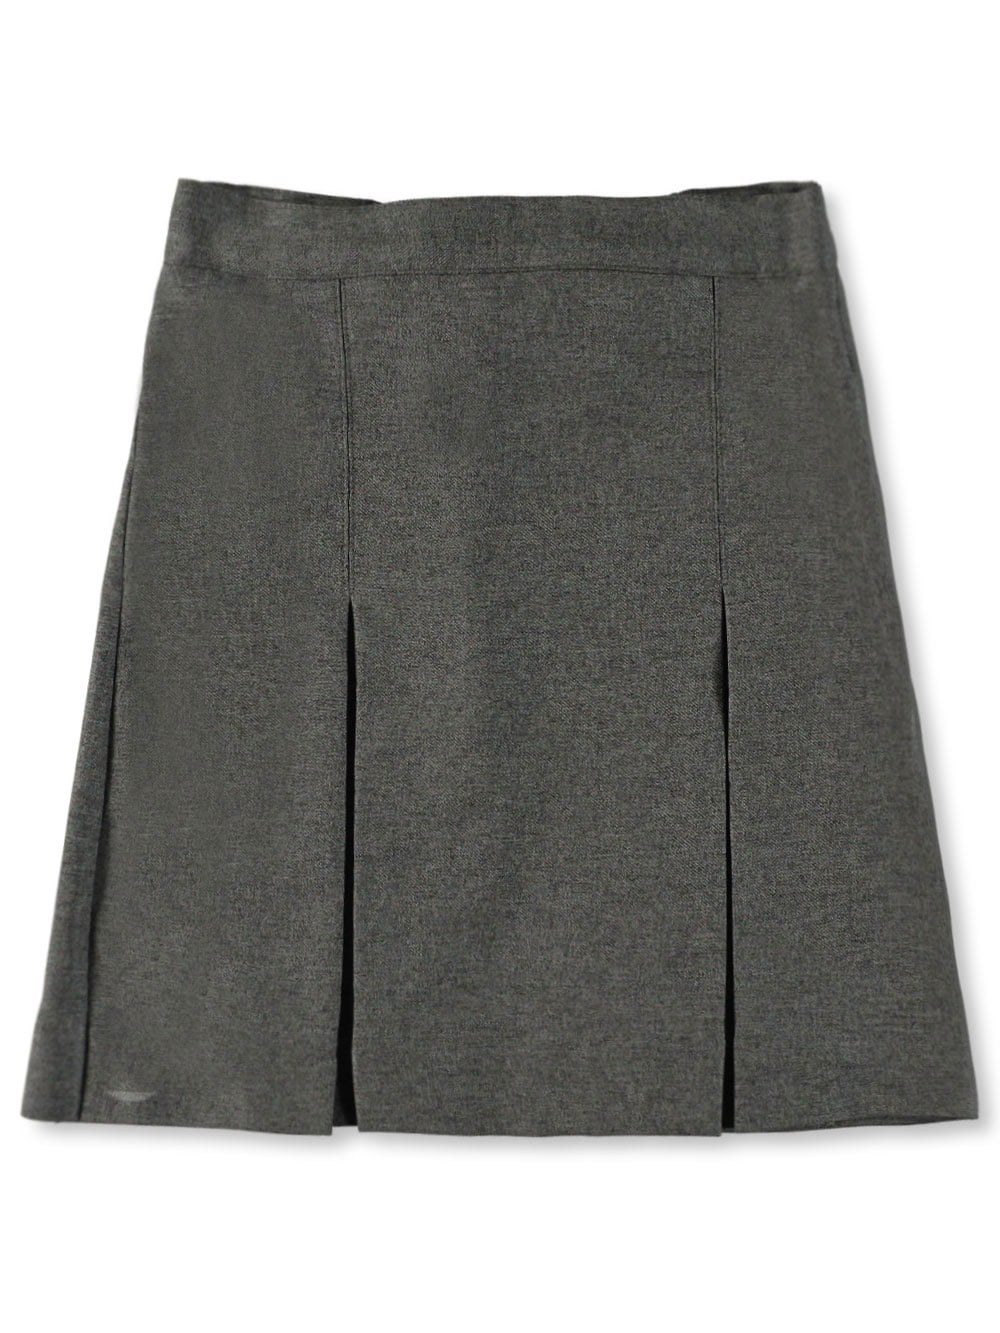 Listers Schoolwear Ages 4-13 Girls School Skirt Adjustable Waist Black Grey Pleated 